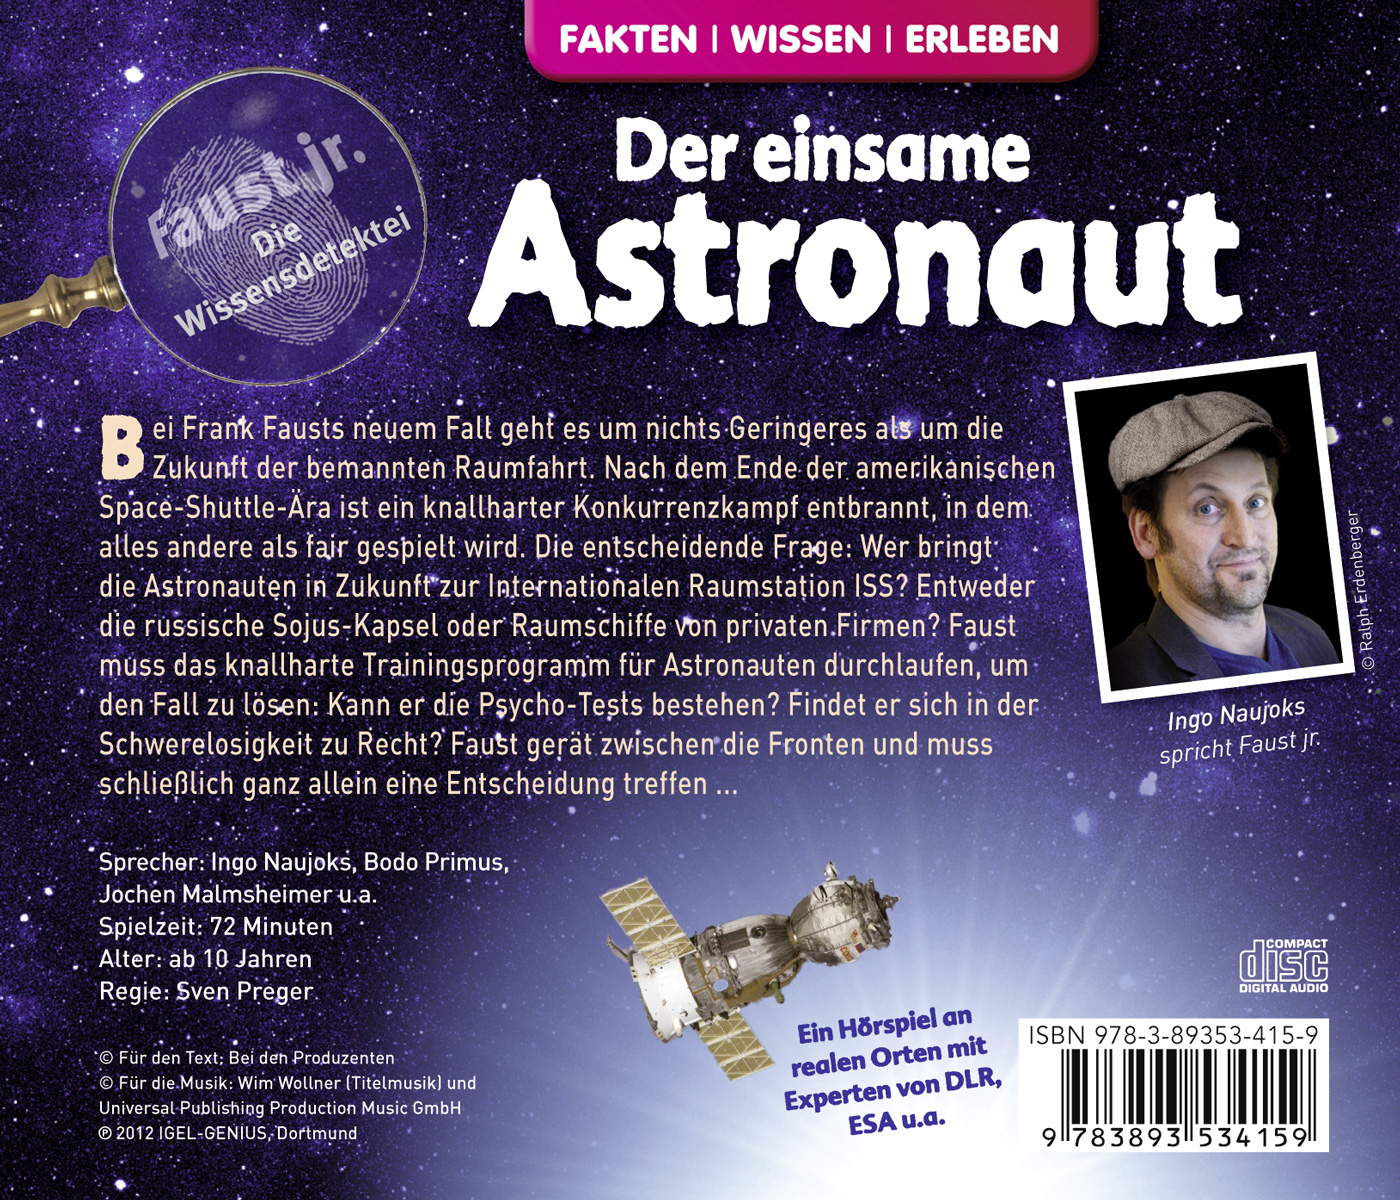 Faust jr. ermittelt 6. Der einsame Astronaut (Audio-CD)